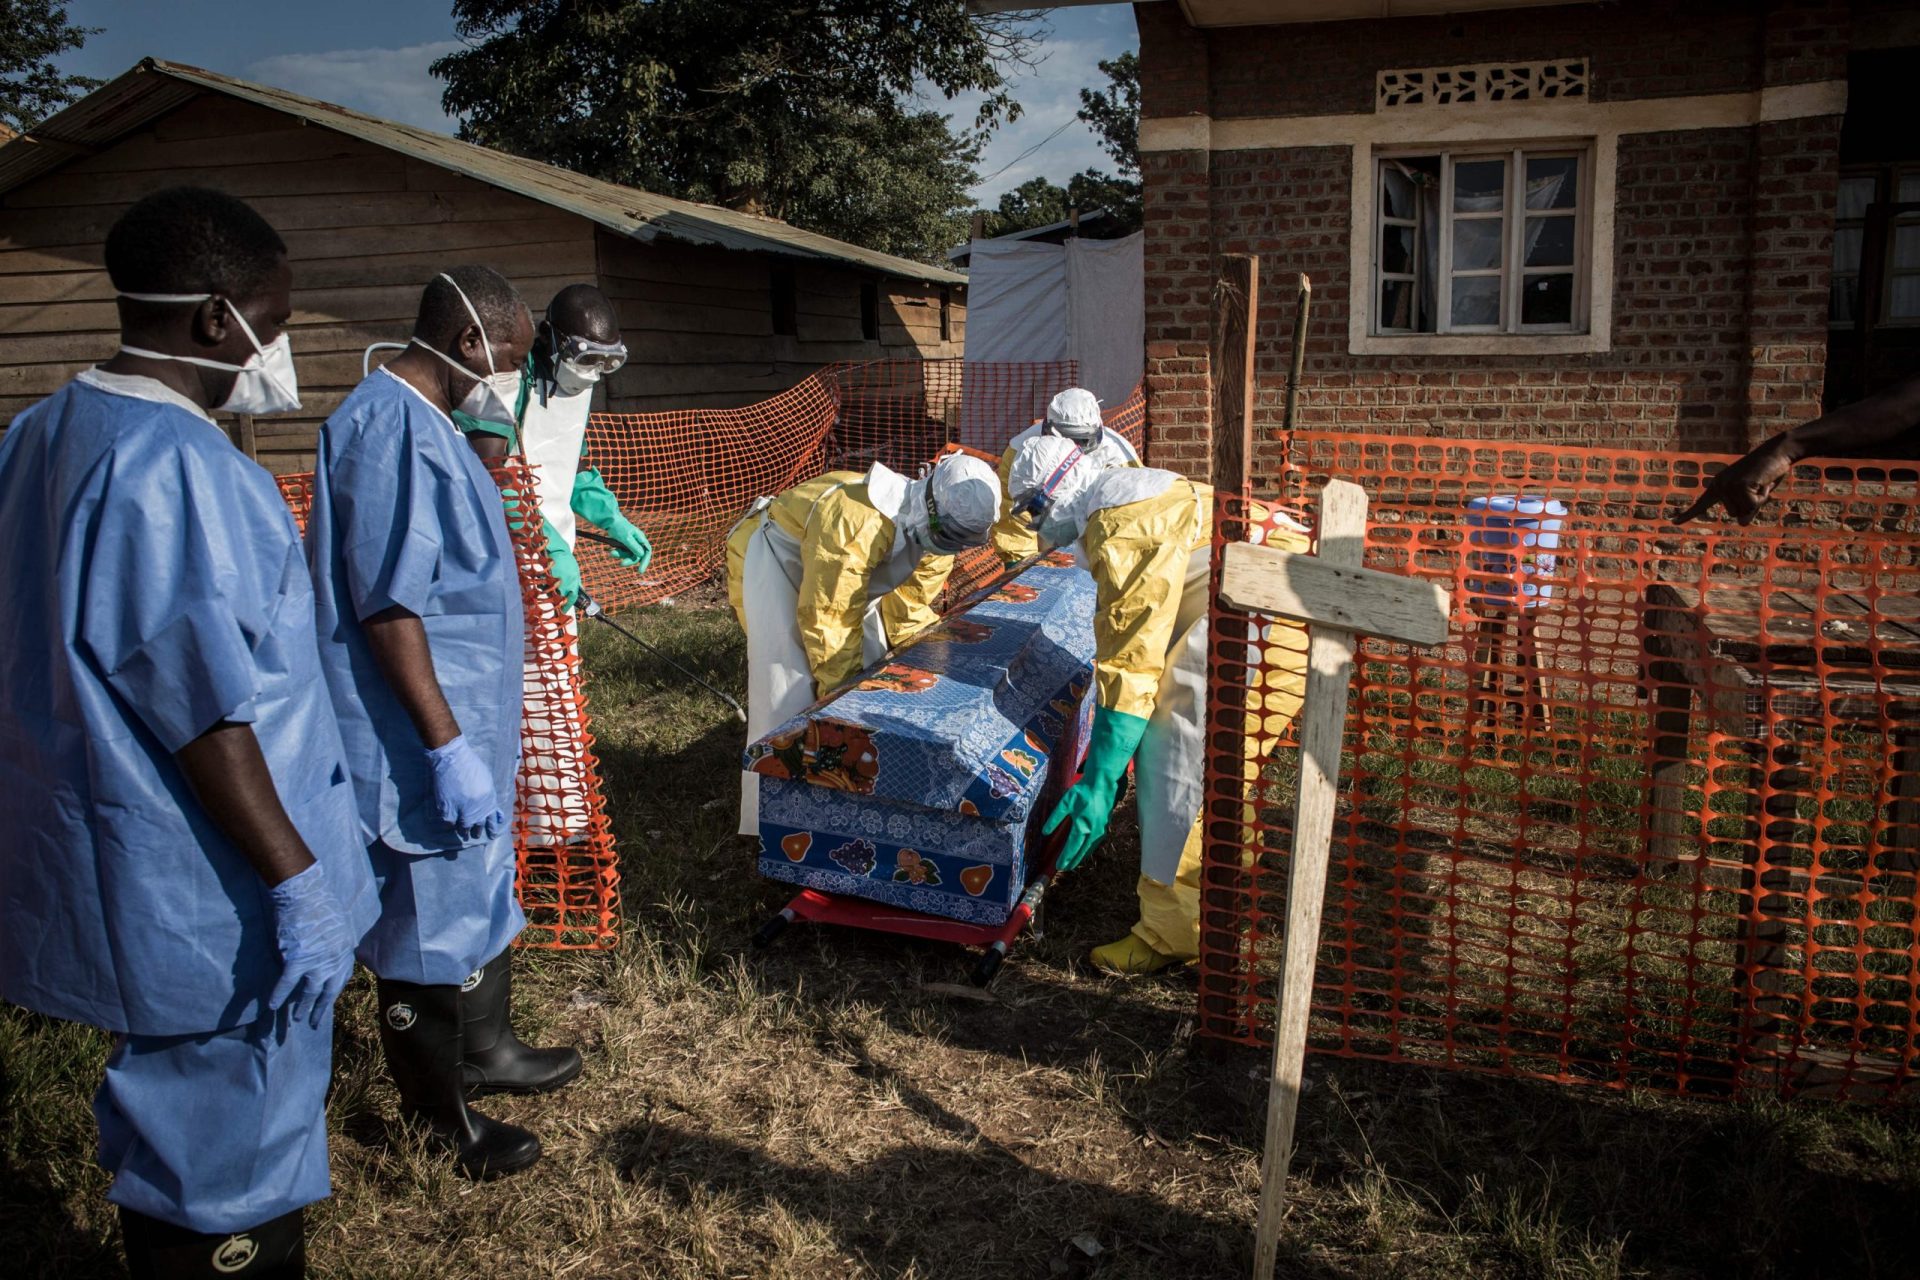 Surto de ébola na RD Congo é o segundo maior da história, diz OMS